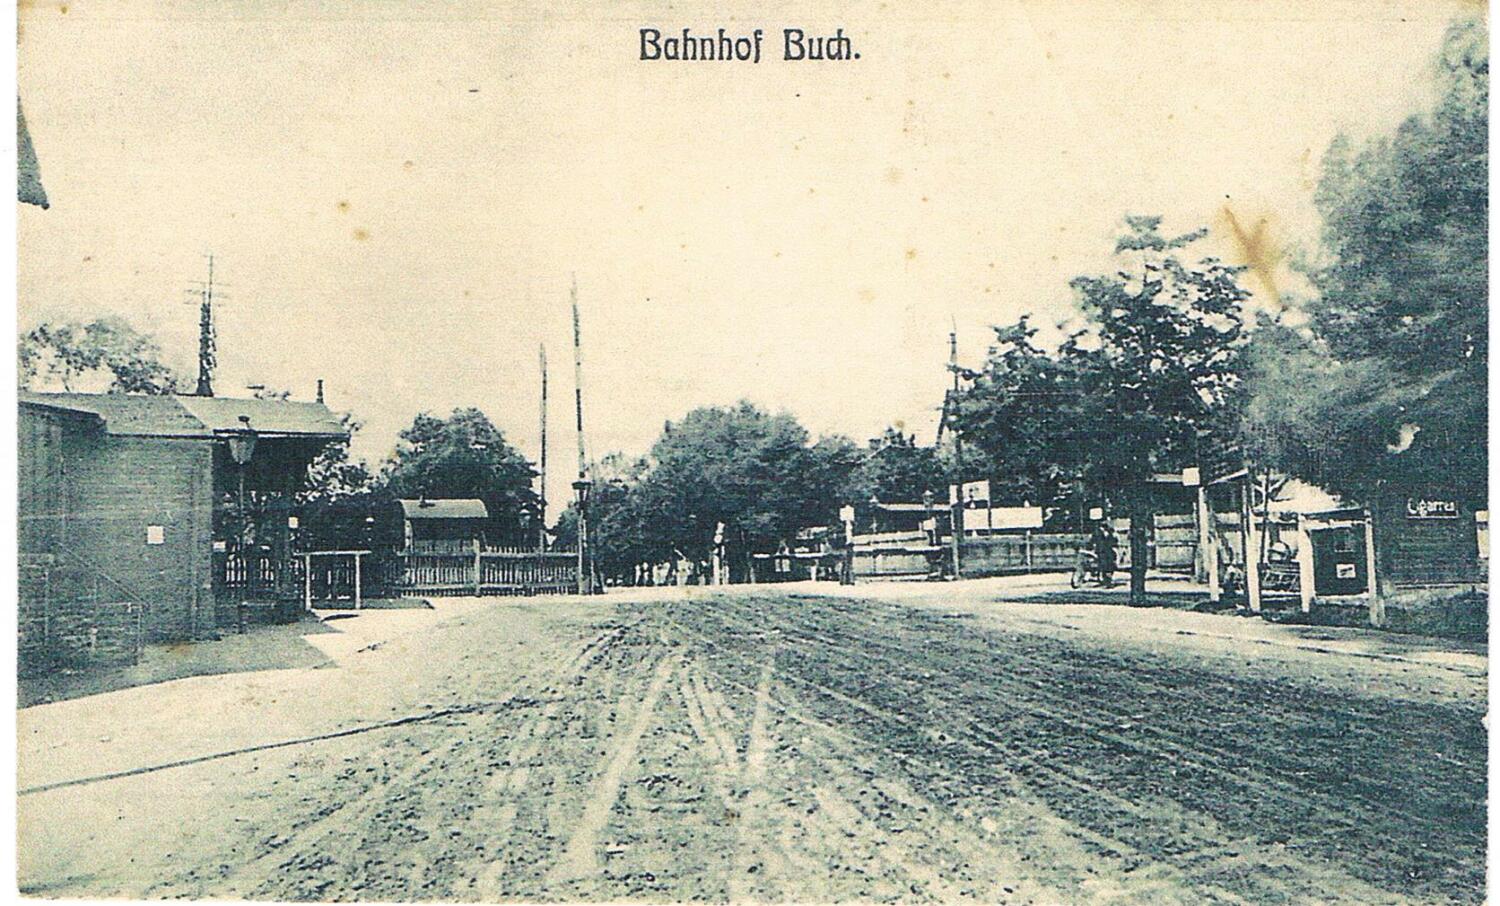 Bahnhof Buch, Postkarte um 1900